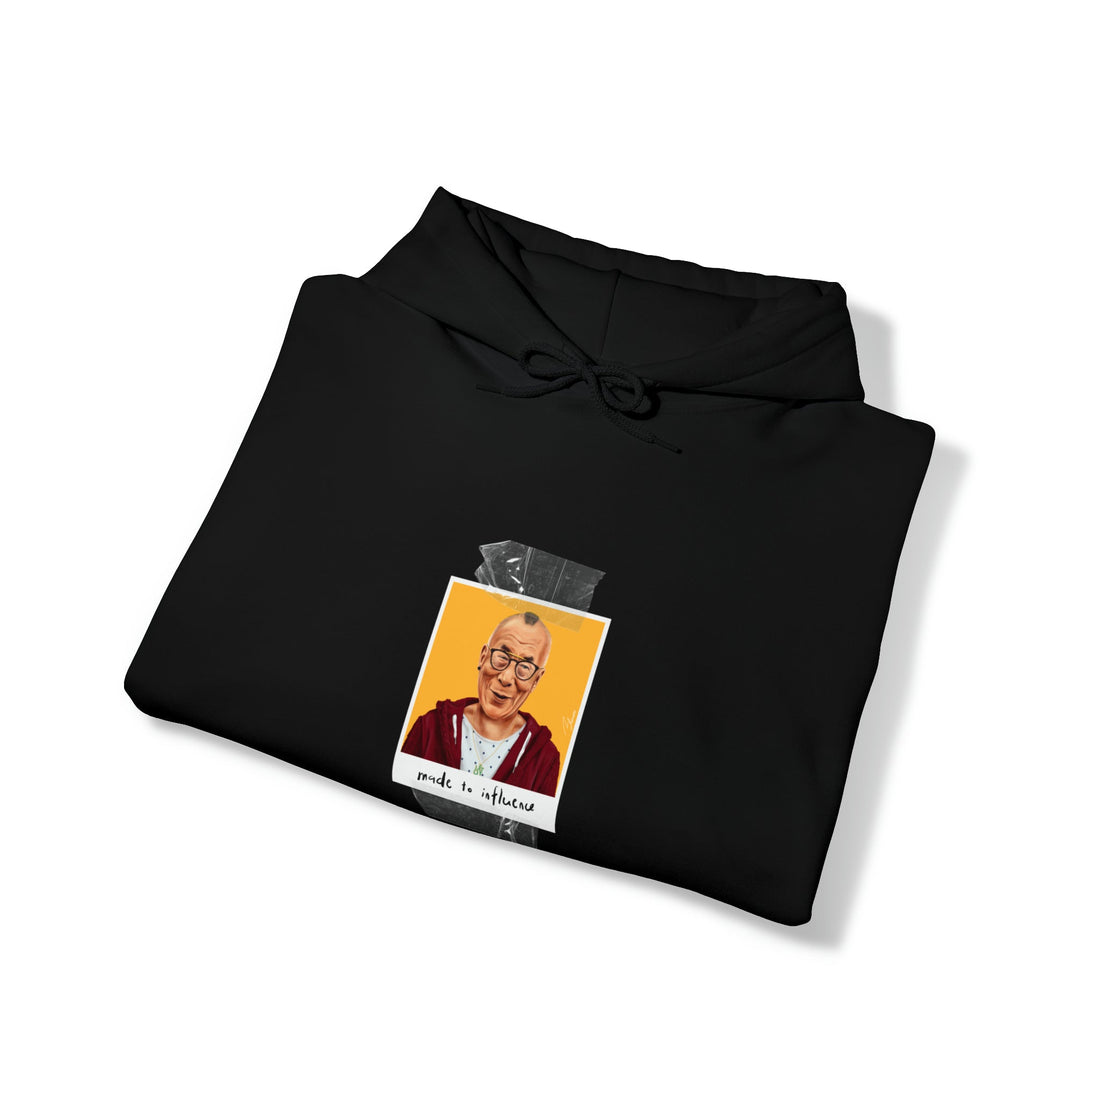 Dalai Lama Hipstory Hooded Sweatshirt - Hipstory Shop